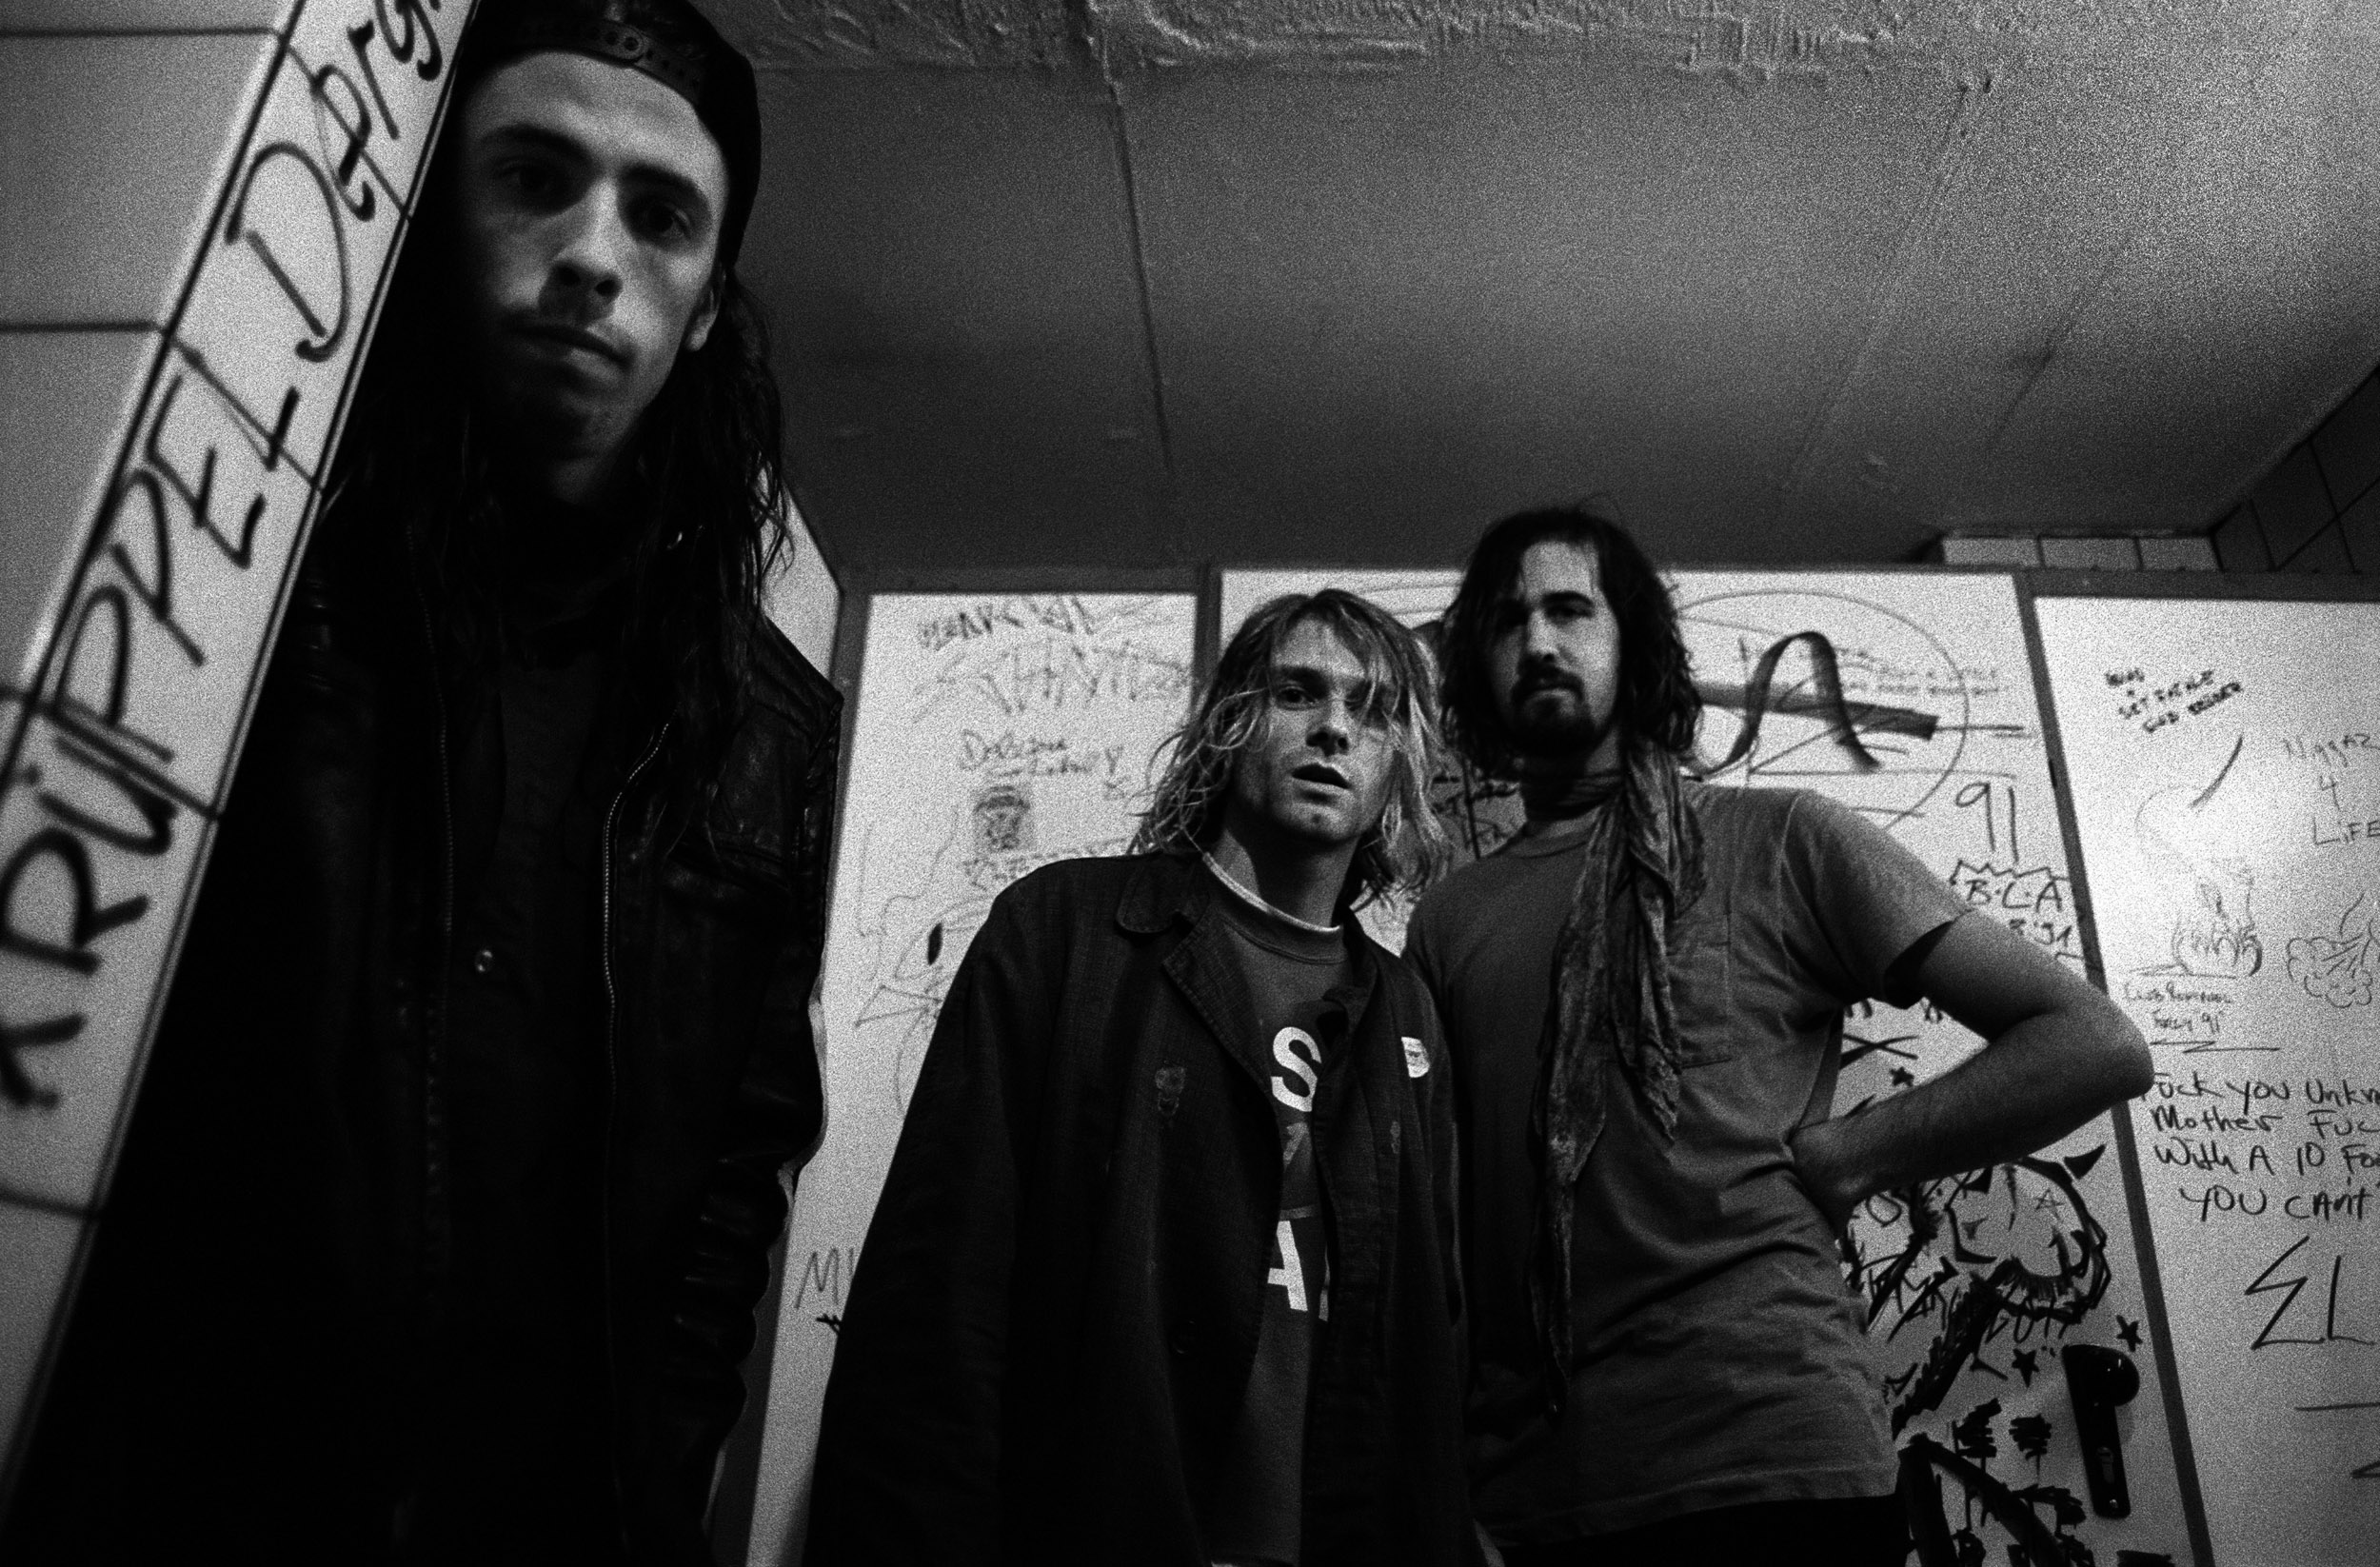 Dave Grohl, Kurt Cobain, Krist Novoselic: Nirvana 1991 backstage in Frankfurt/Main